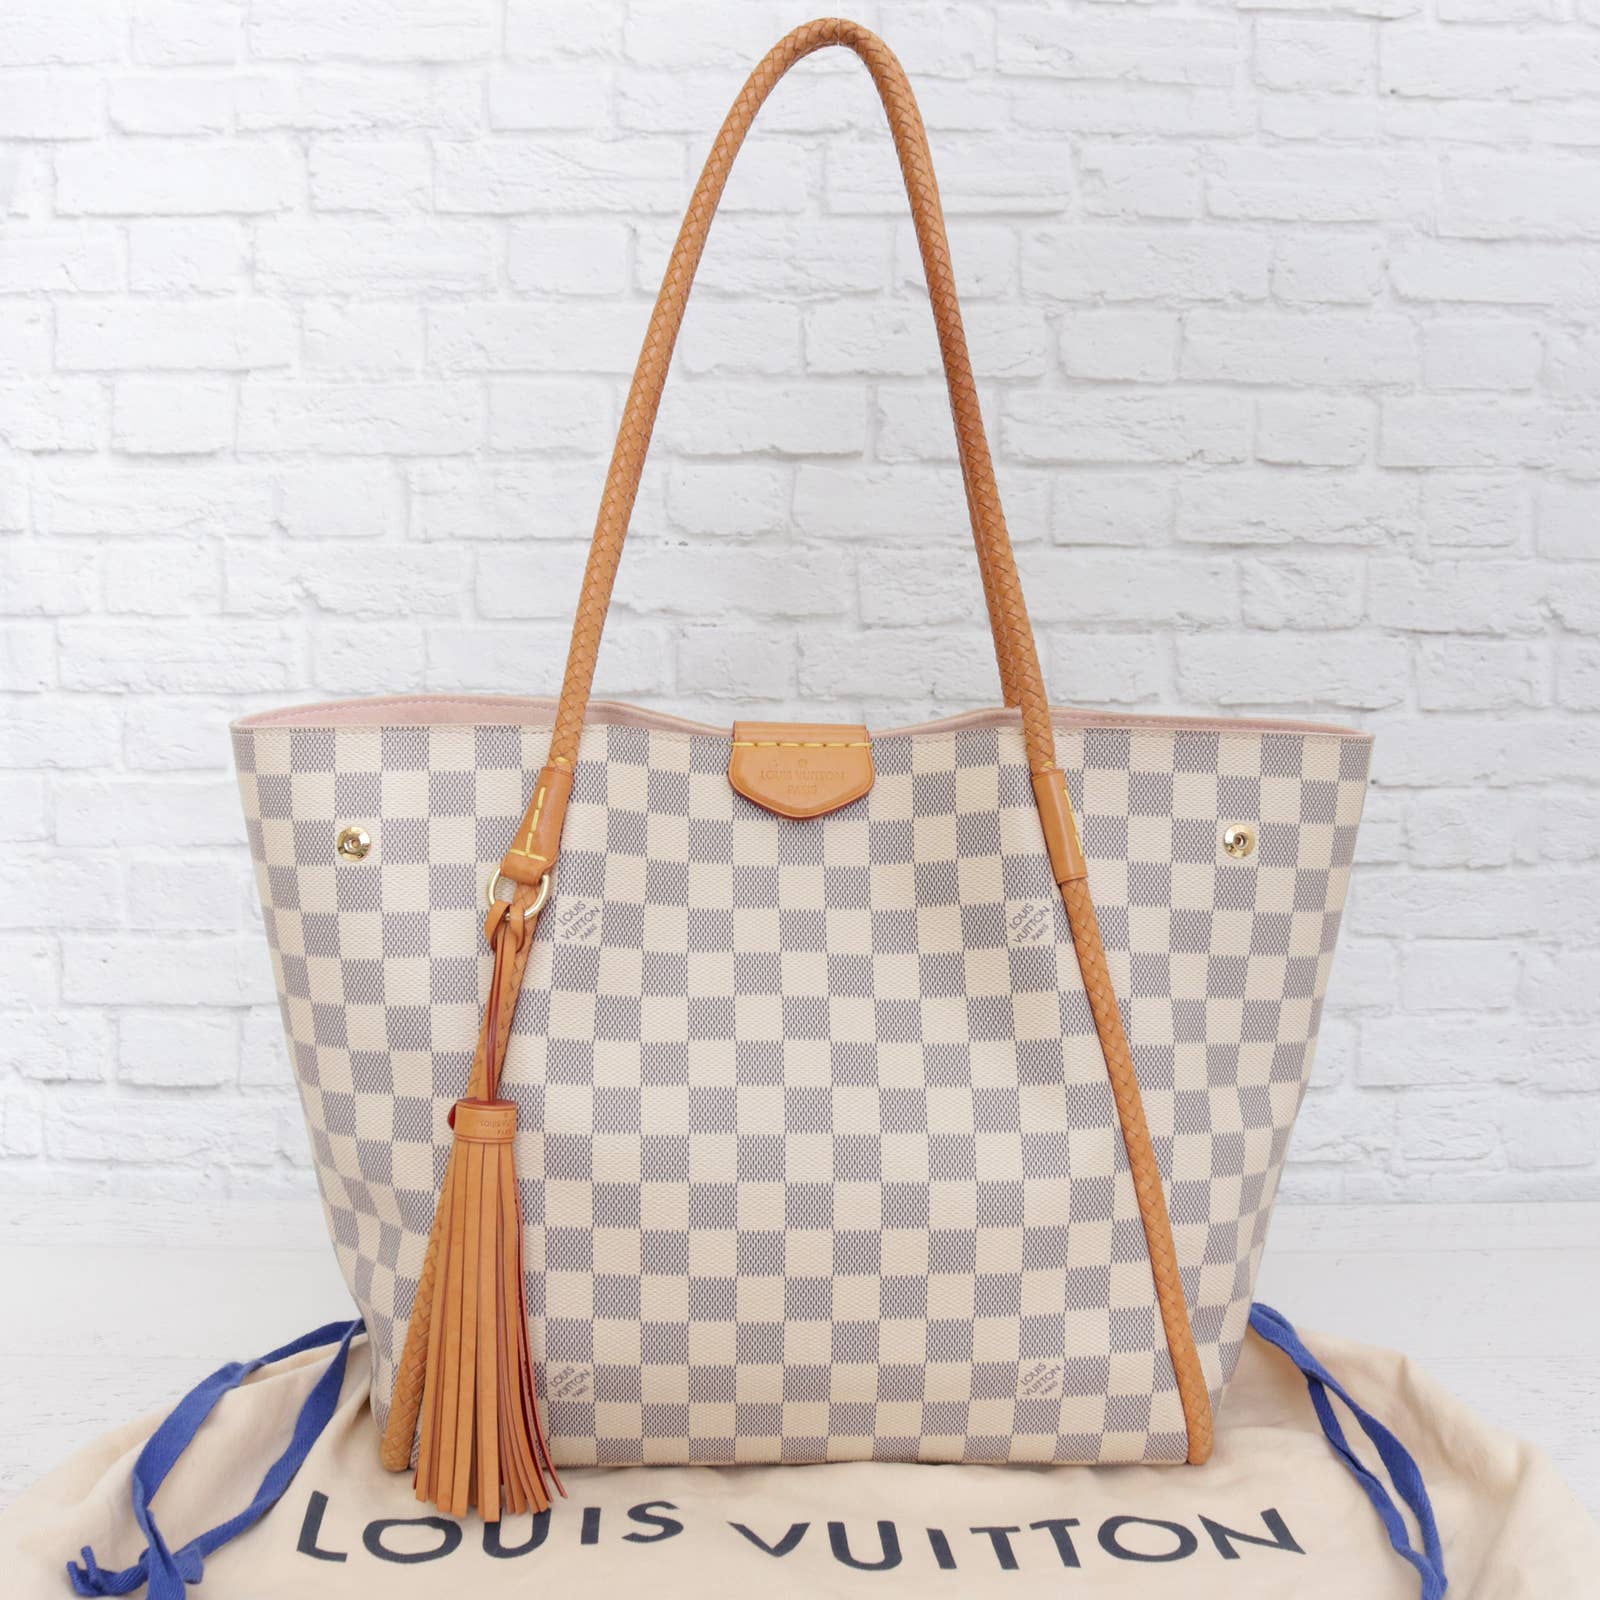 Louis Vuitton Propriano Damier Azur Tote Shoulder Bag White Large